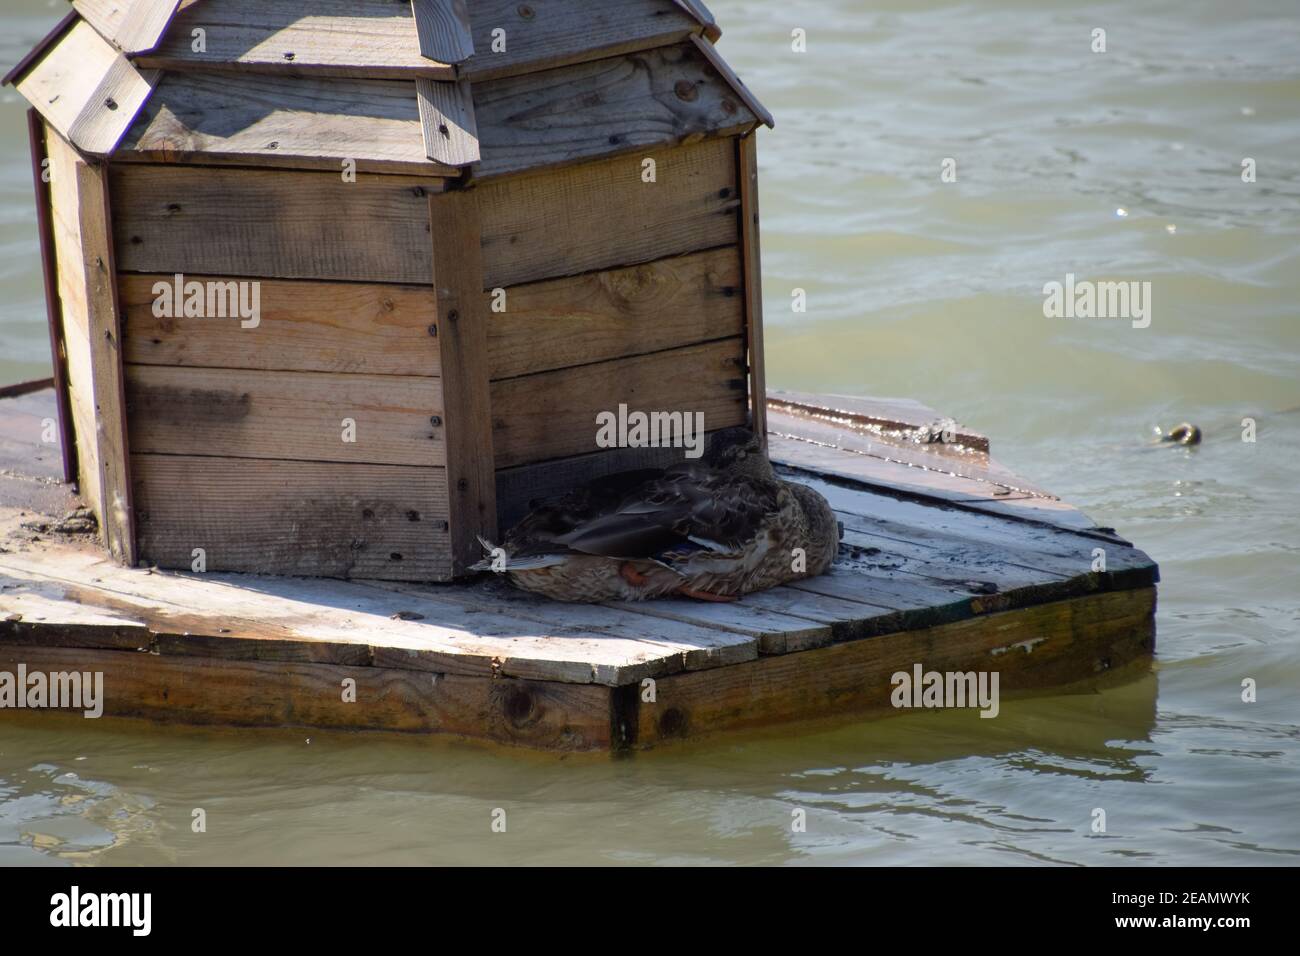 Houses for ducks on the lake. Taking care of ducks. Man-made nests for gray ducks Stock Photo